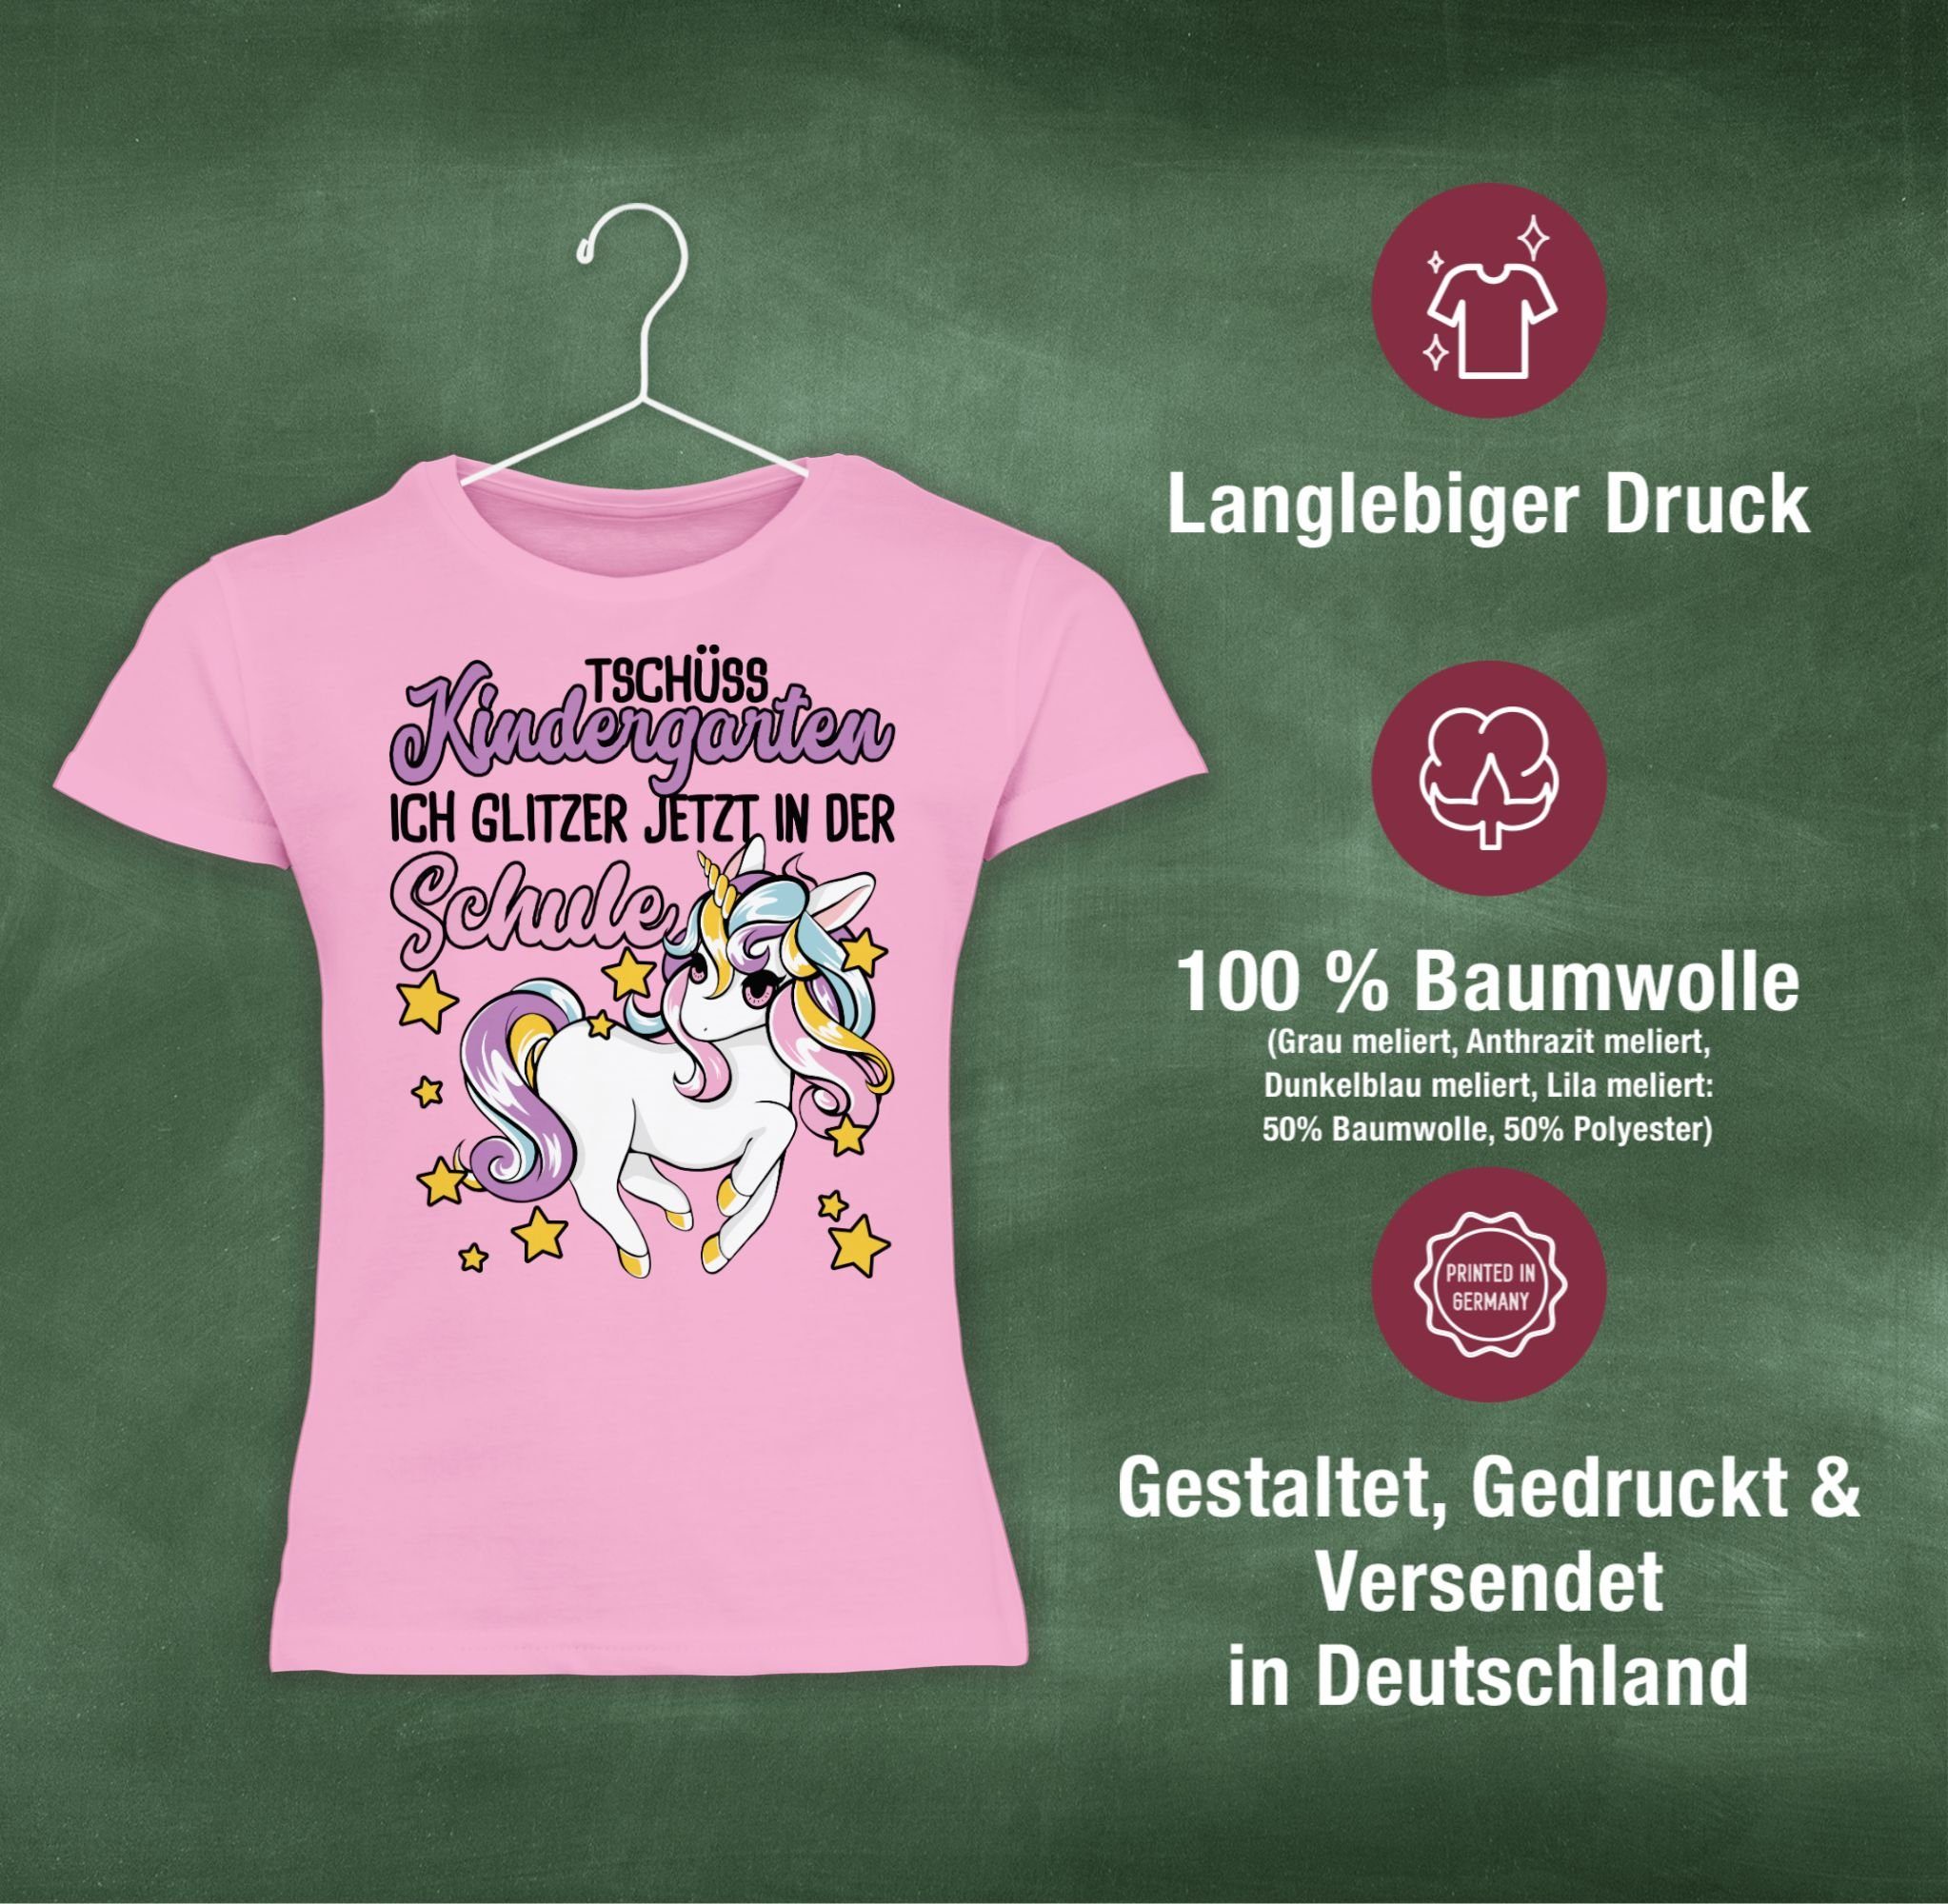 Glitzer - Einschulung 2 T-Shirt Schule Shirtracer in jetzt der Mädchen Tschüss Rosa Kindergarten Einhorn